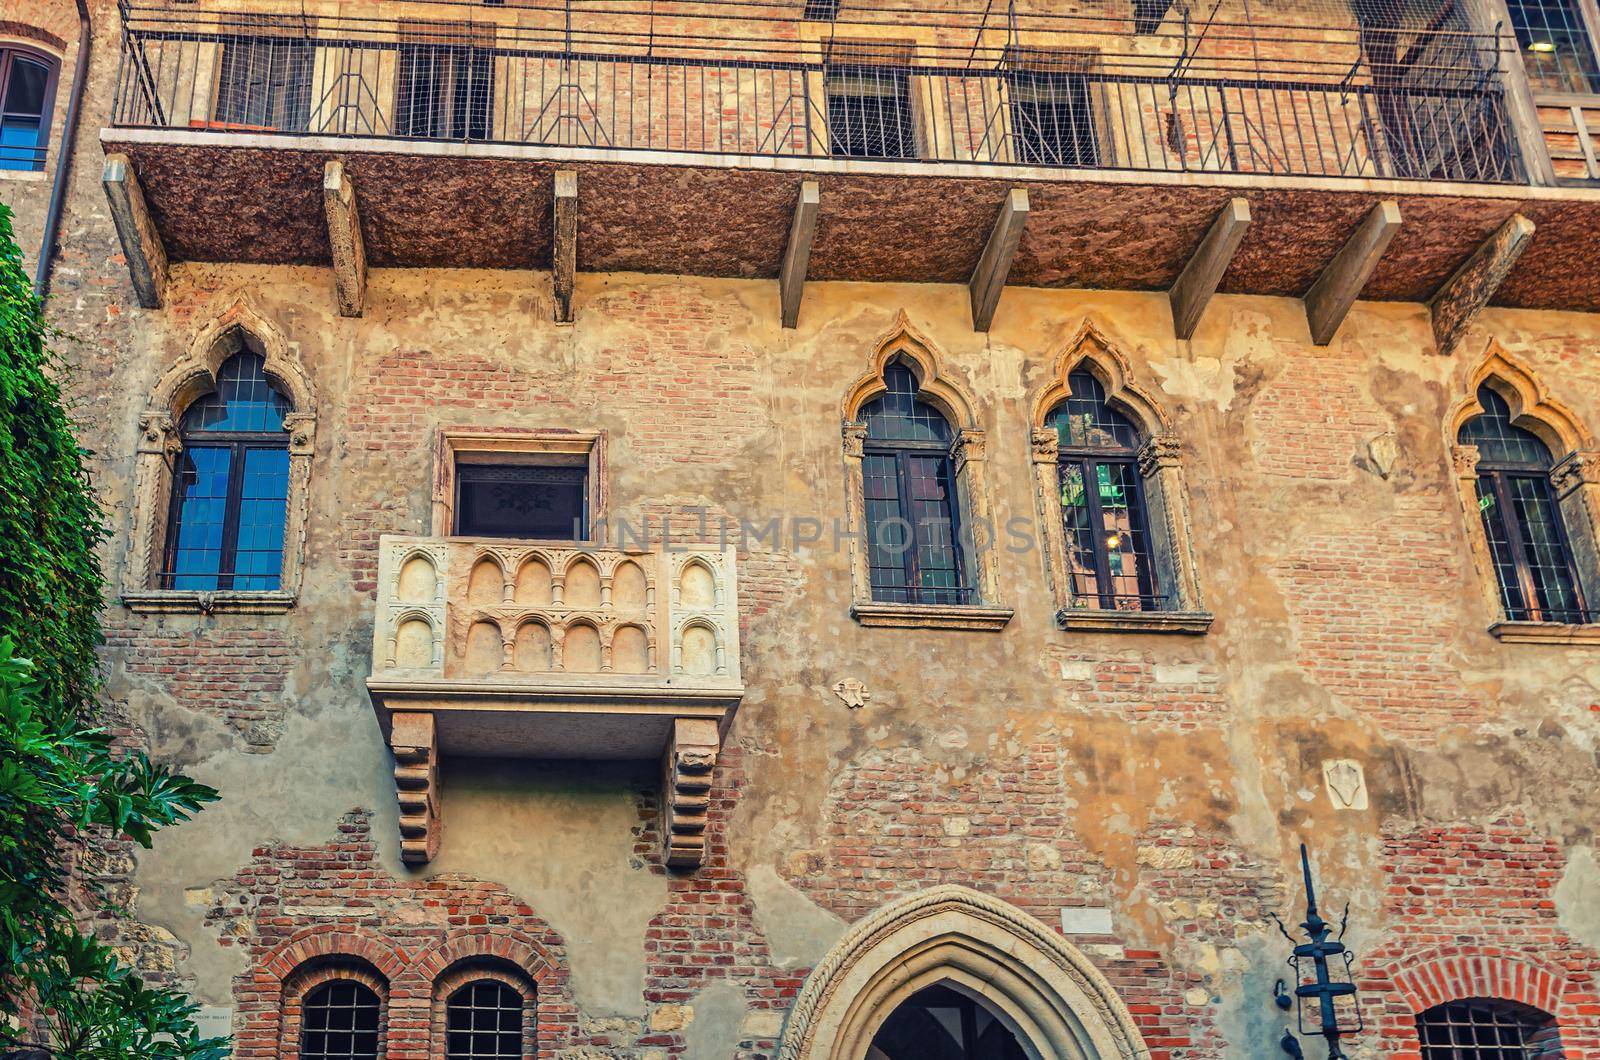 Casa di Giulietta with Juliet balcony by Aliaksandr_Antanovich